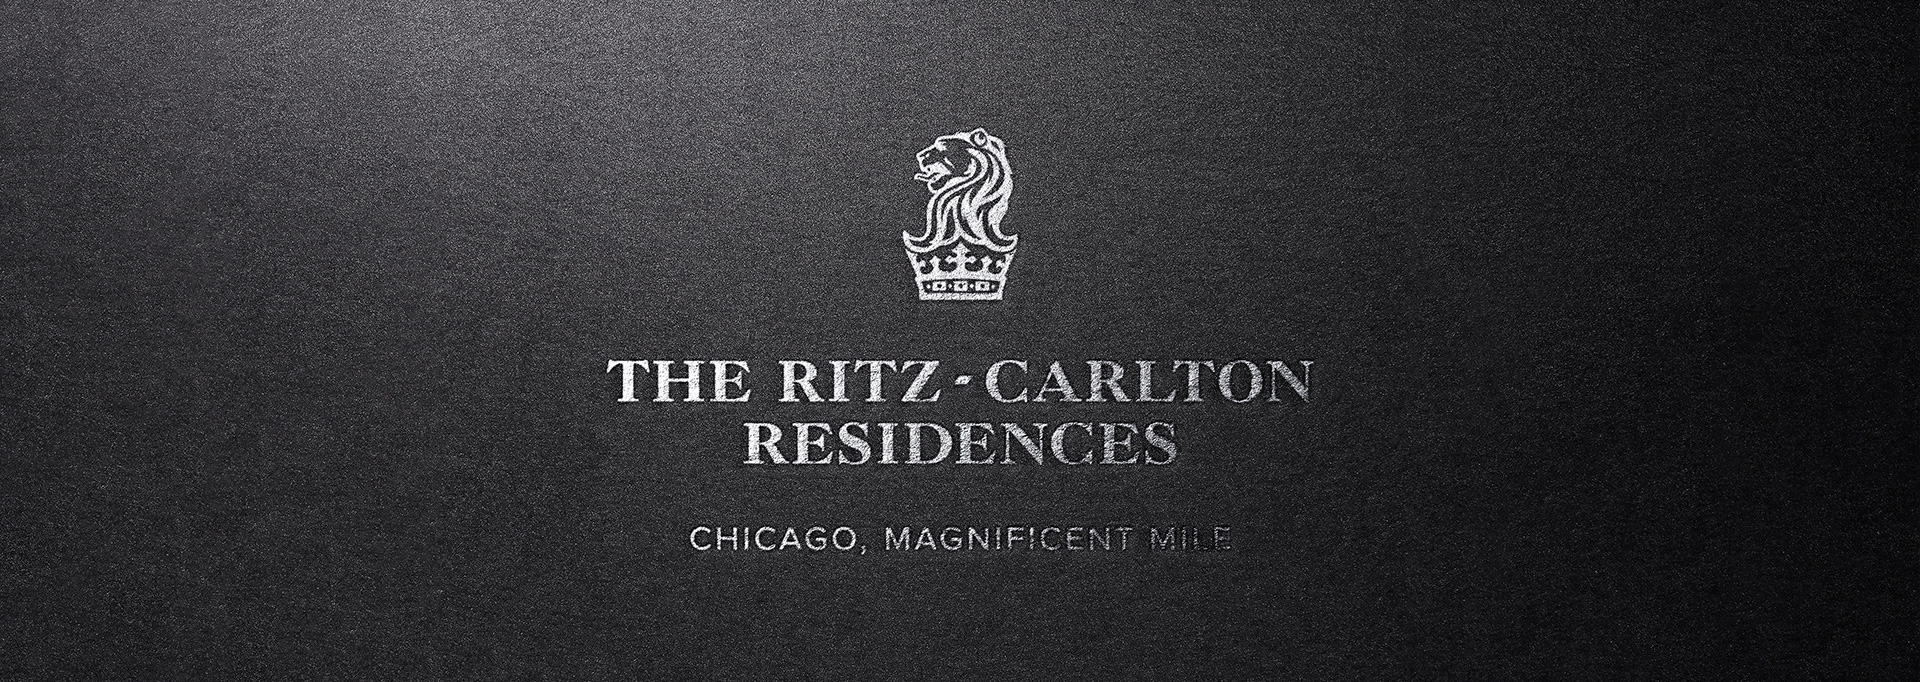 The Ritz-Carlton Residences Header